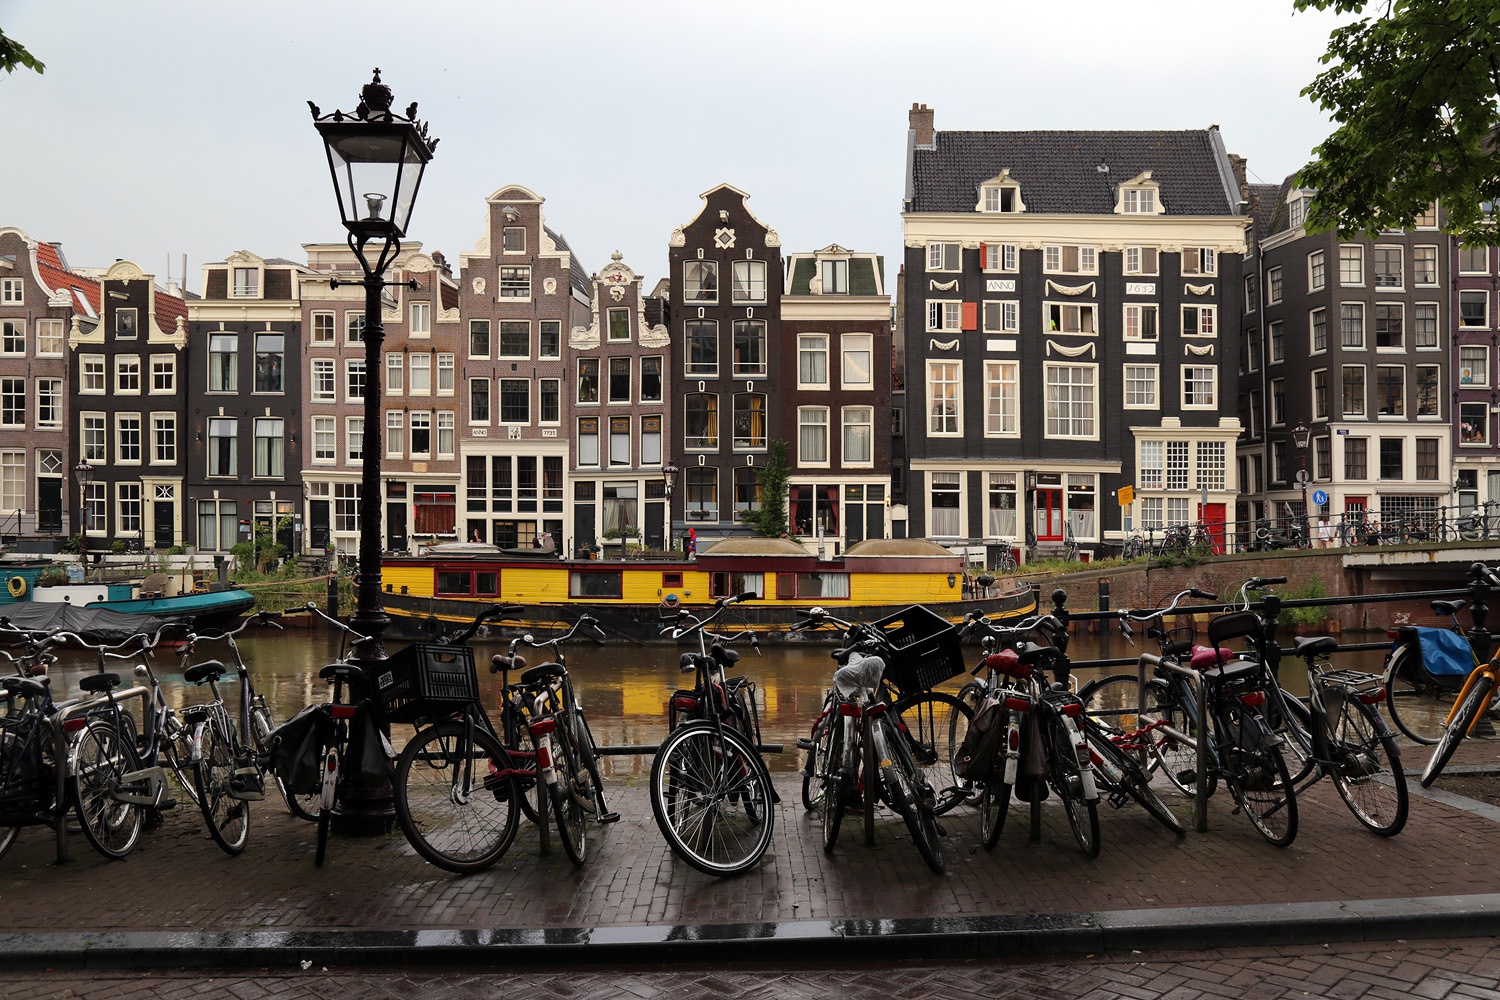 bill-hocker-singel-canal-amsterdam-holland-2016